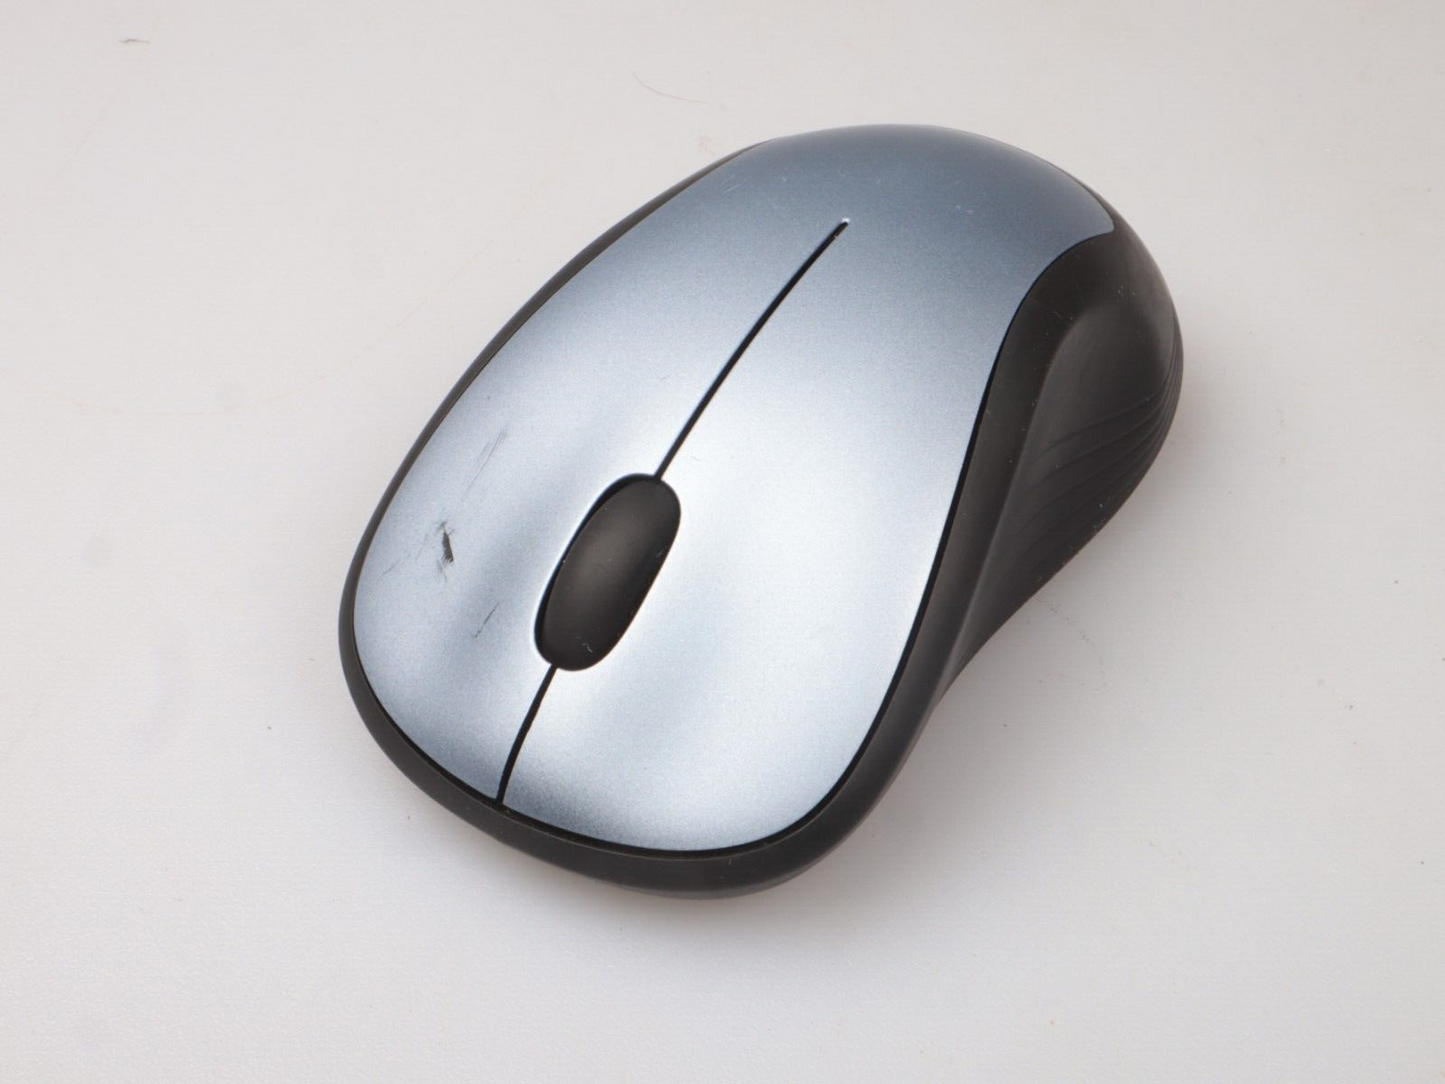 Logitech M310 | Wireless Optical Mouse | No Receiver | Silver/Black